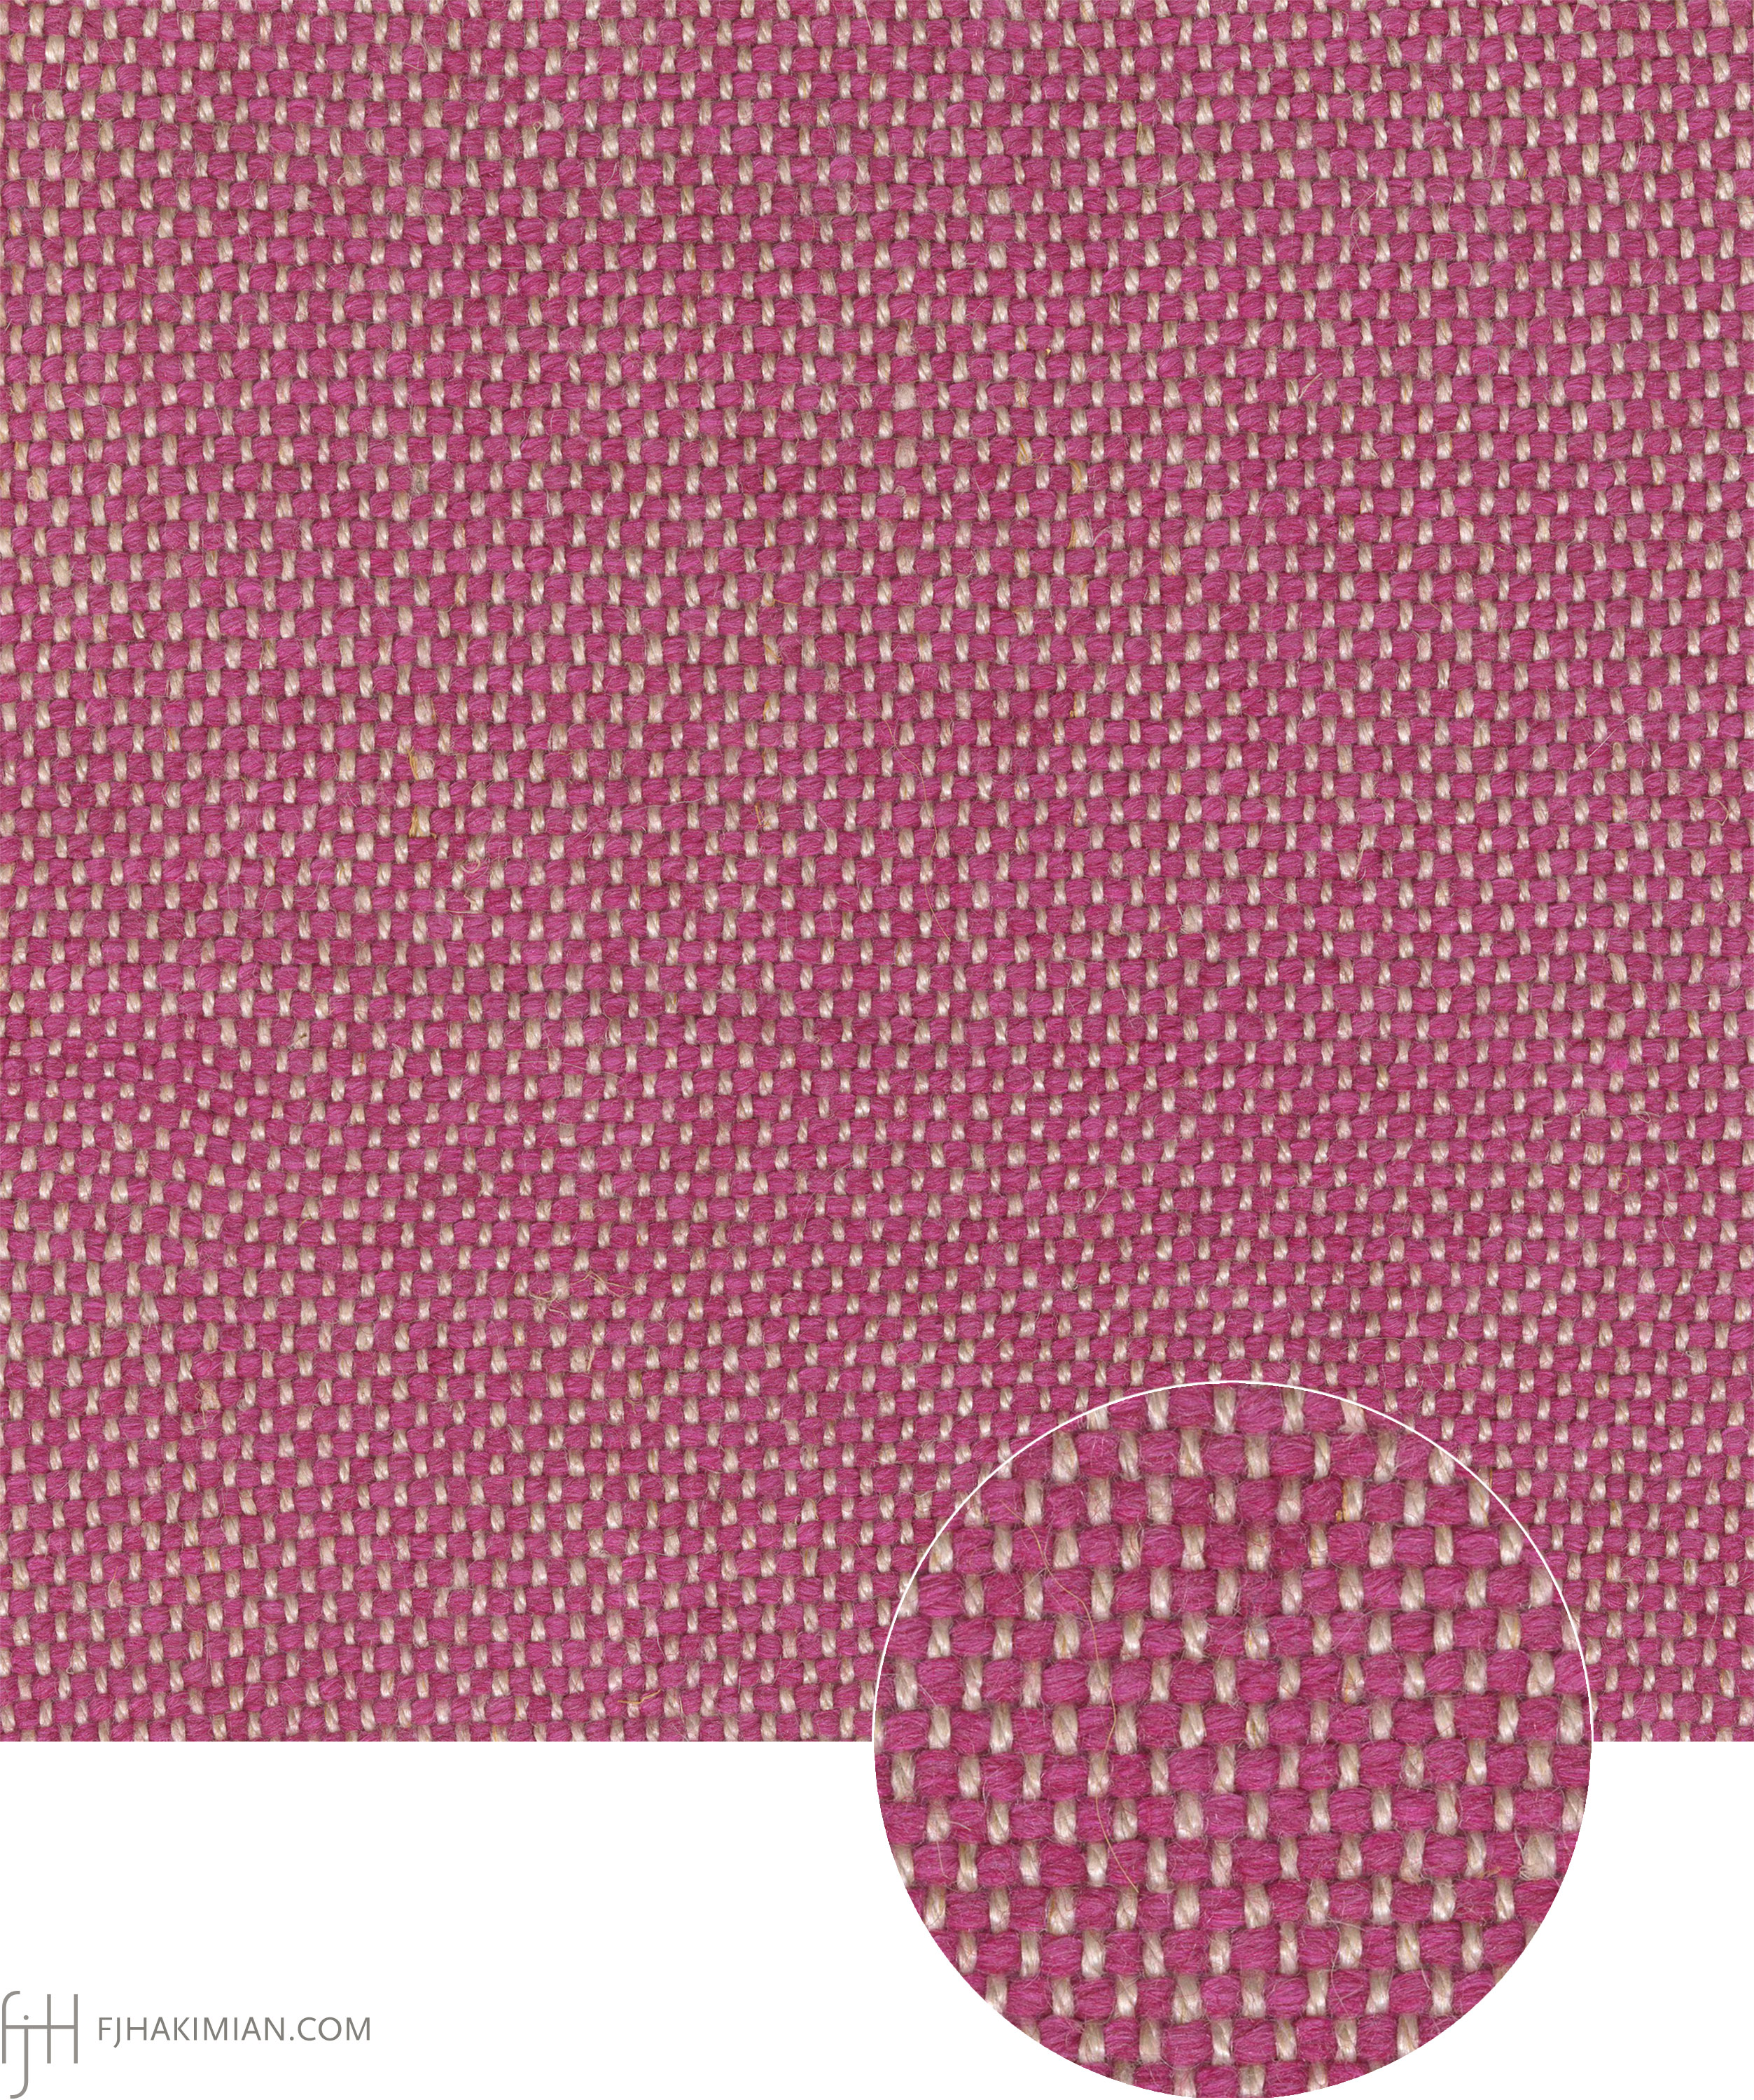 AB-LI Upholstery Fabric | FJ Hakimian Carpet Gallery, New York 